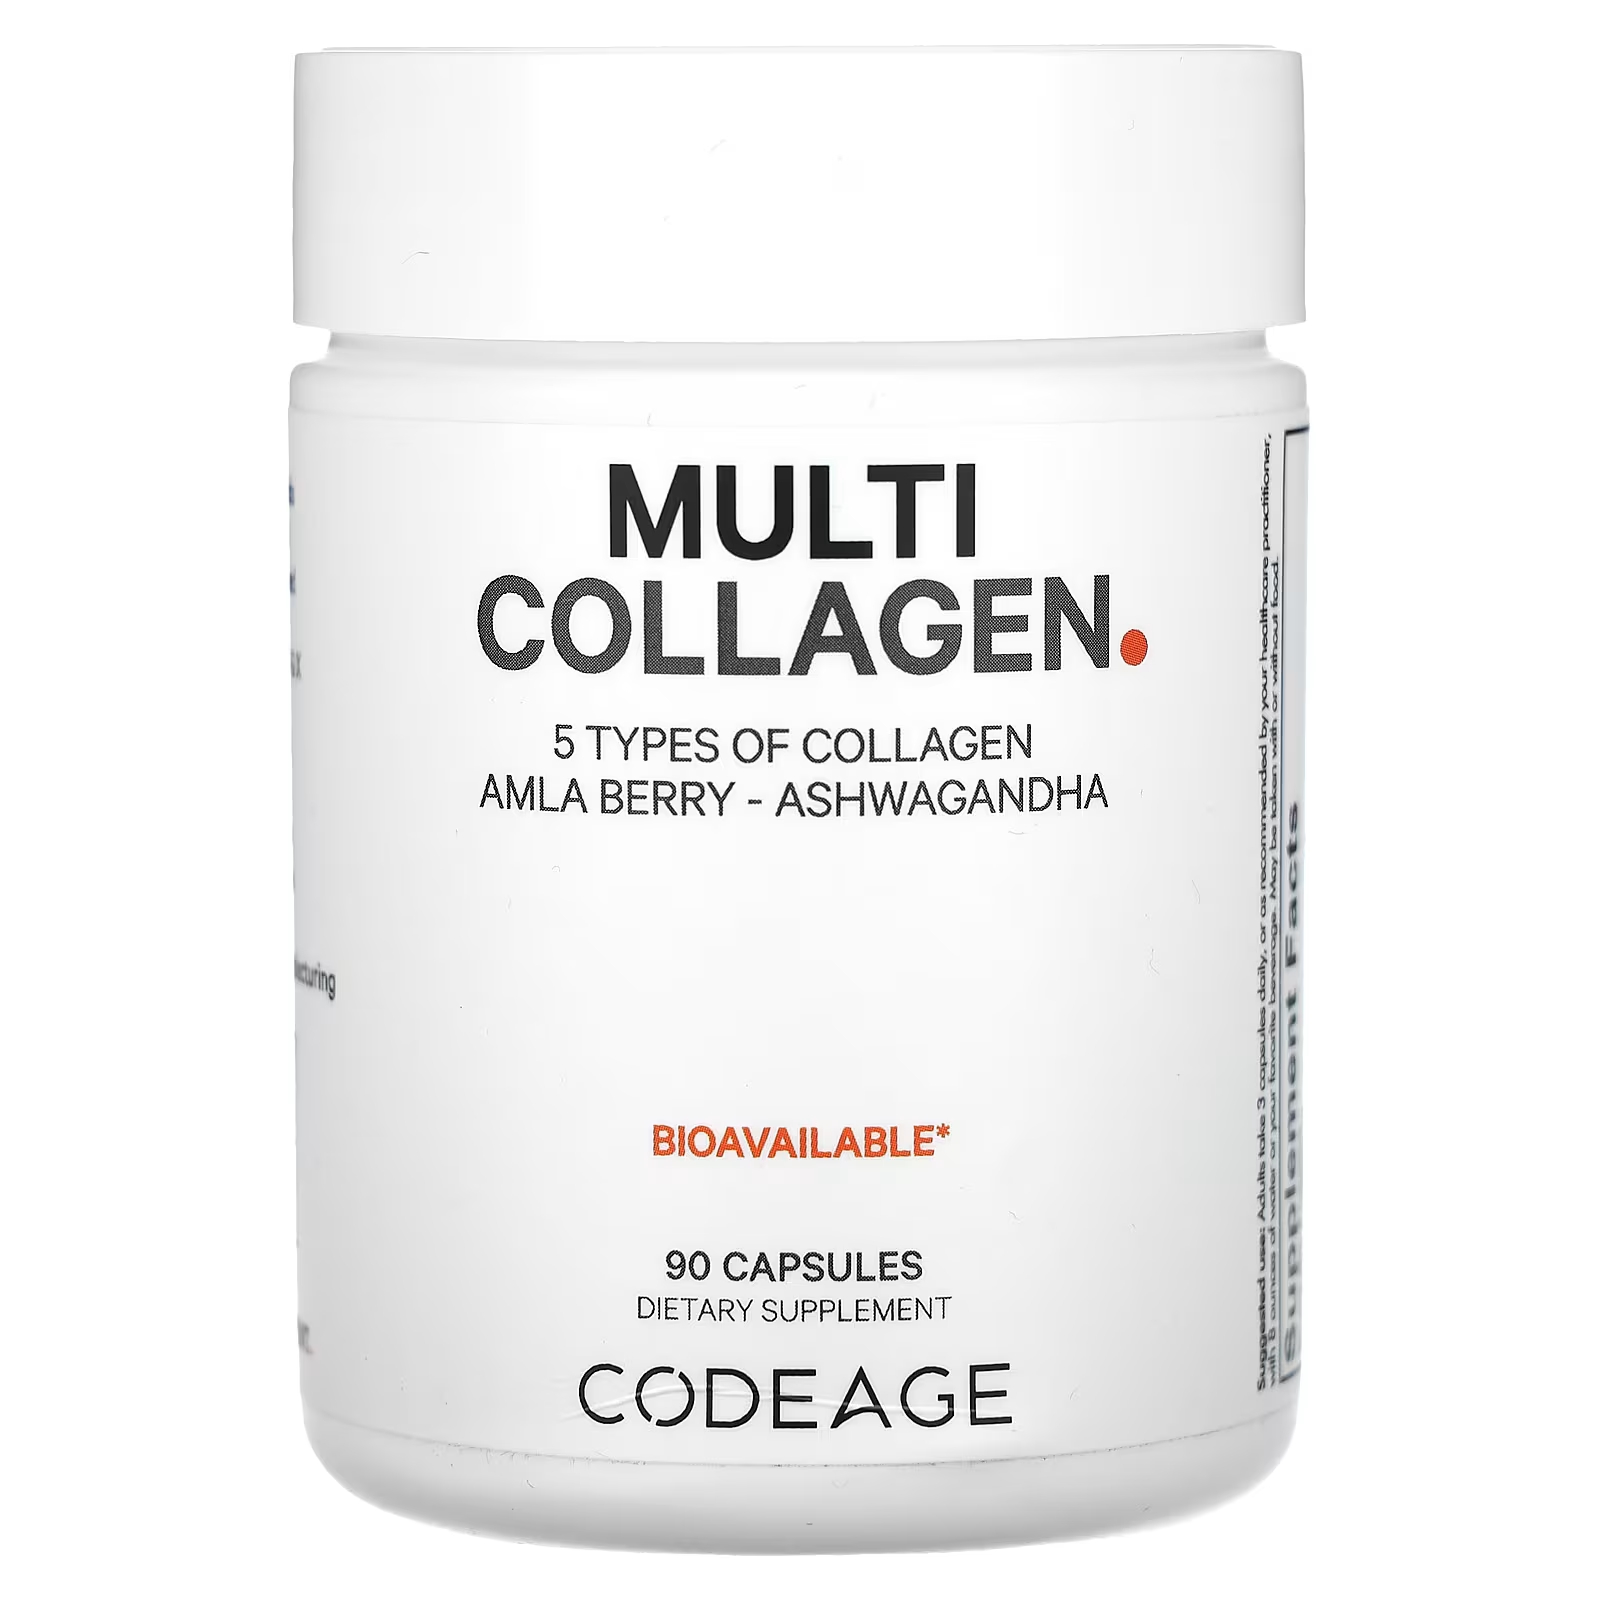 Пищевая добавка Codeage Мульти Коллаген без молочных продуктов, 90 капсул цена и фото